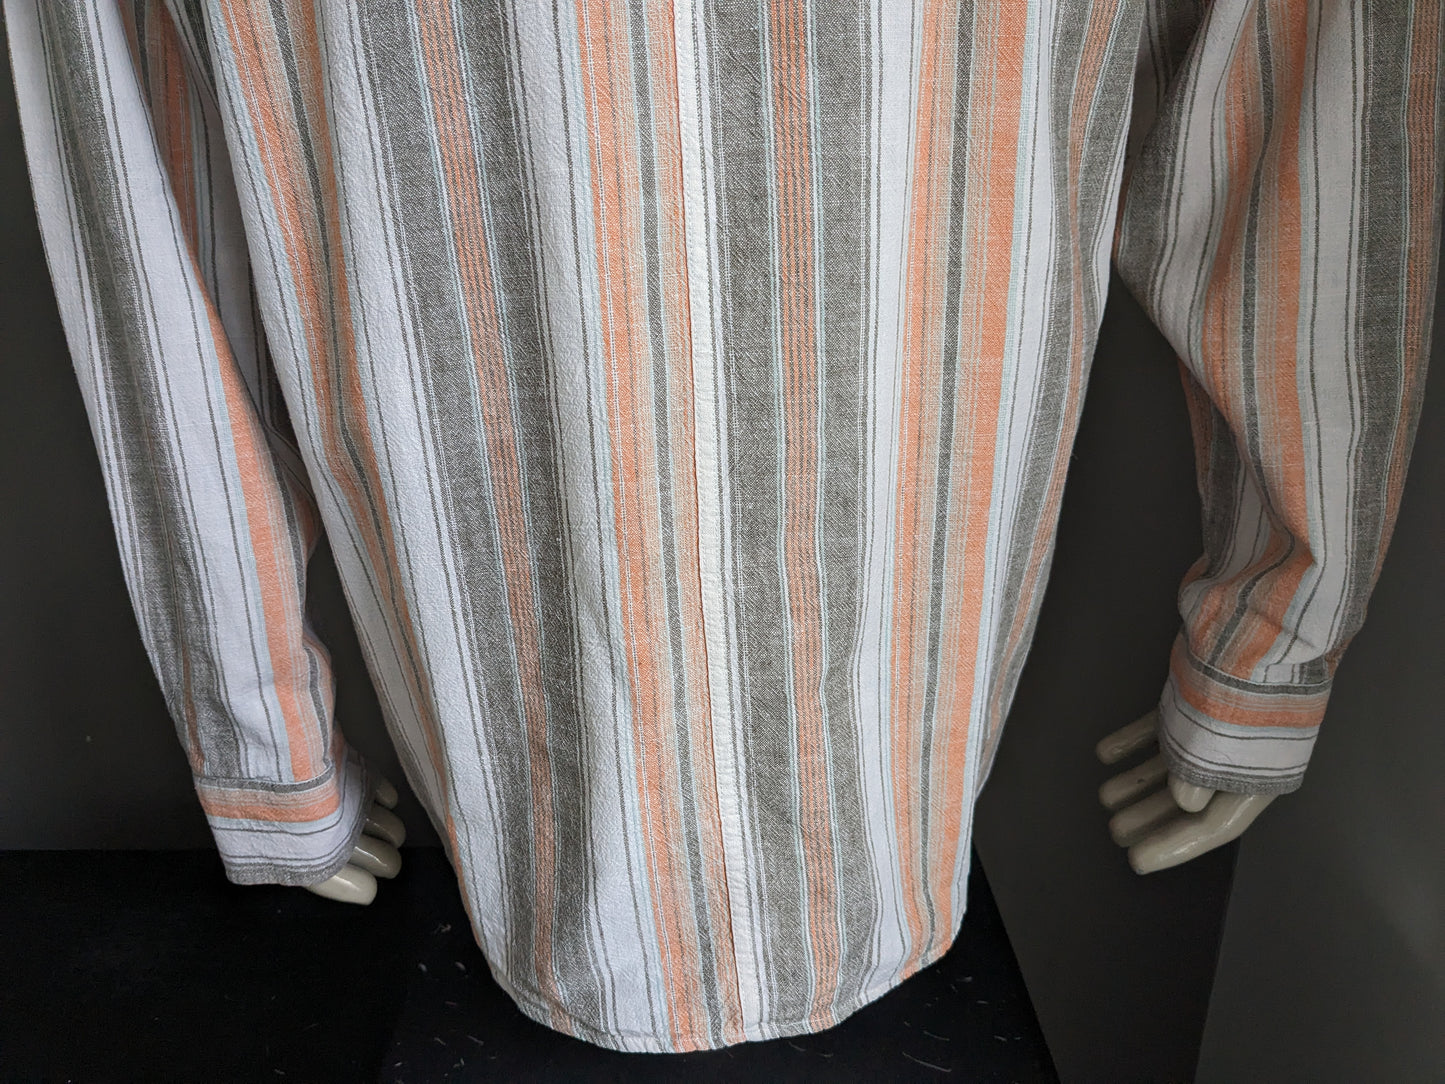 Vintage GW polo sweater / shirt with raised / farmers / mao collar. Orange gray striped. 55% linen. Size XXL.